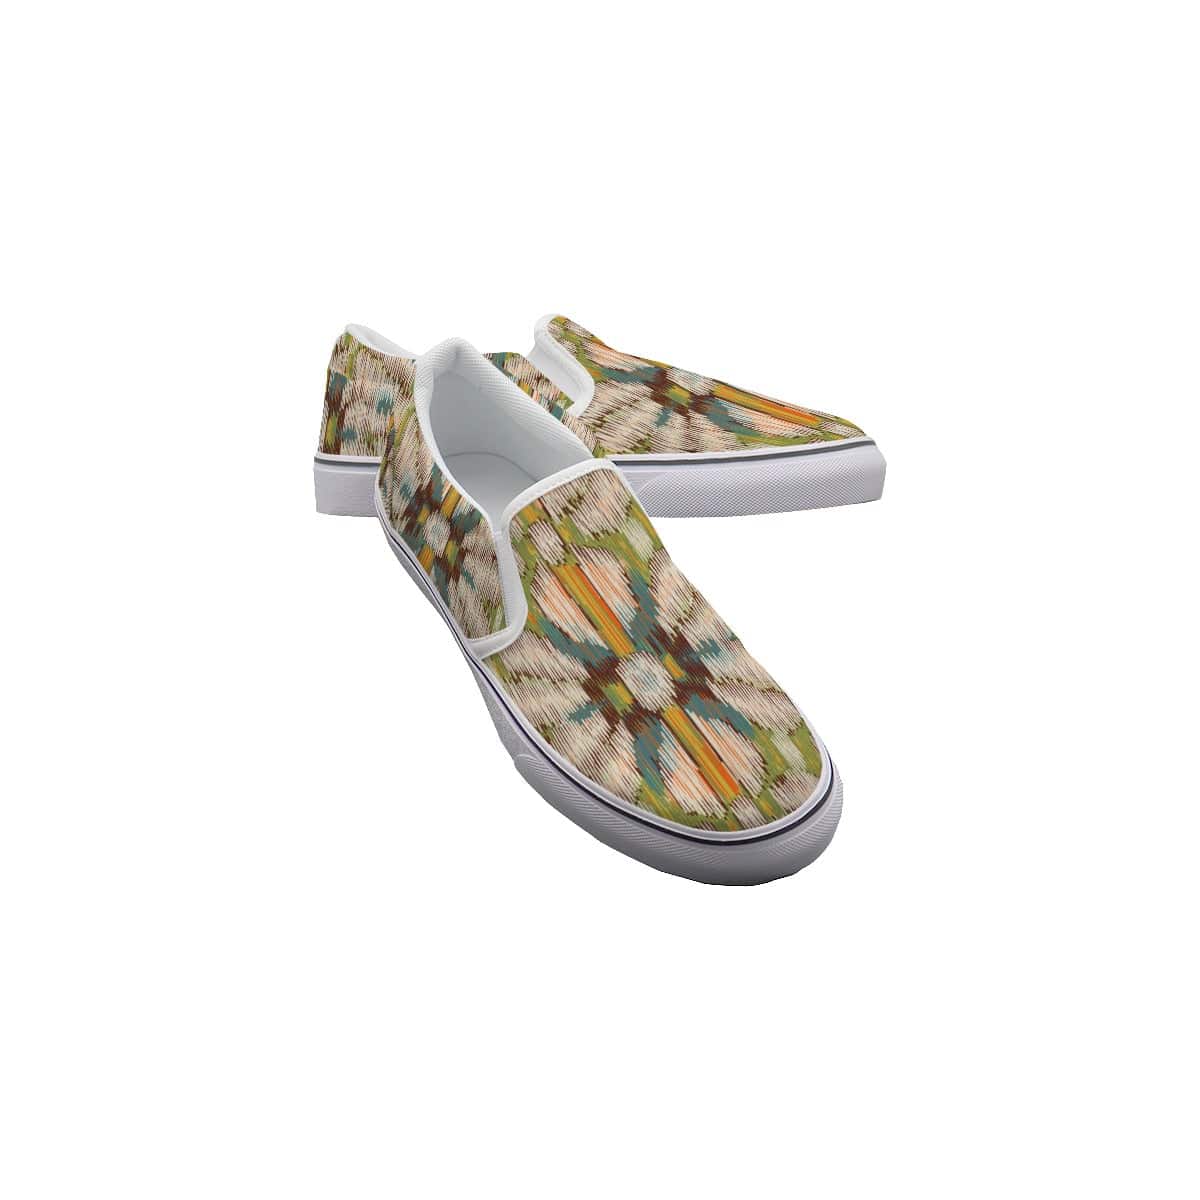 Yoycol White / US6(EUR36) Octagonal Oxfords - Women's Slip On Sneakers